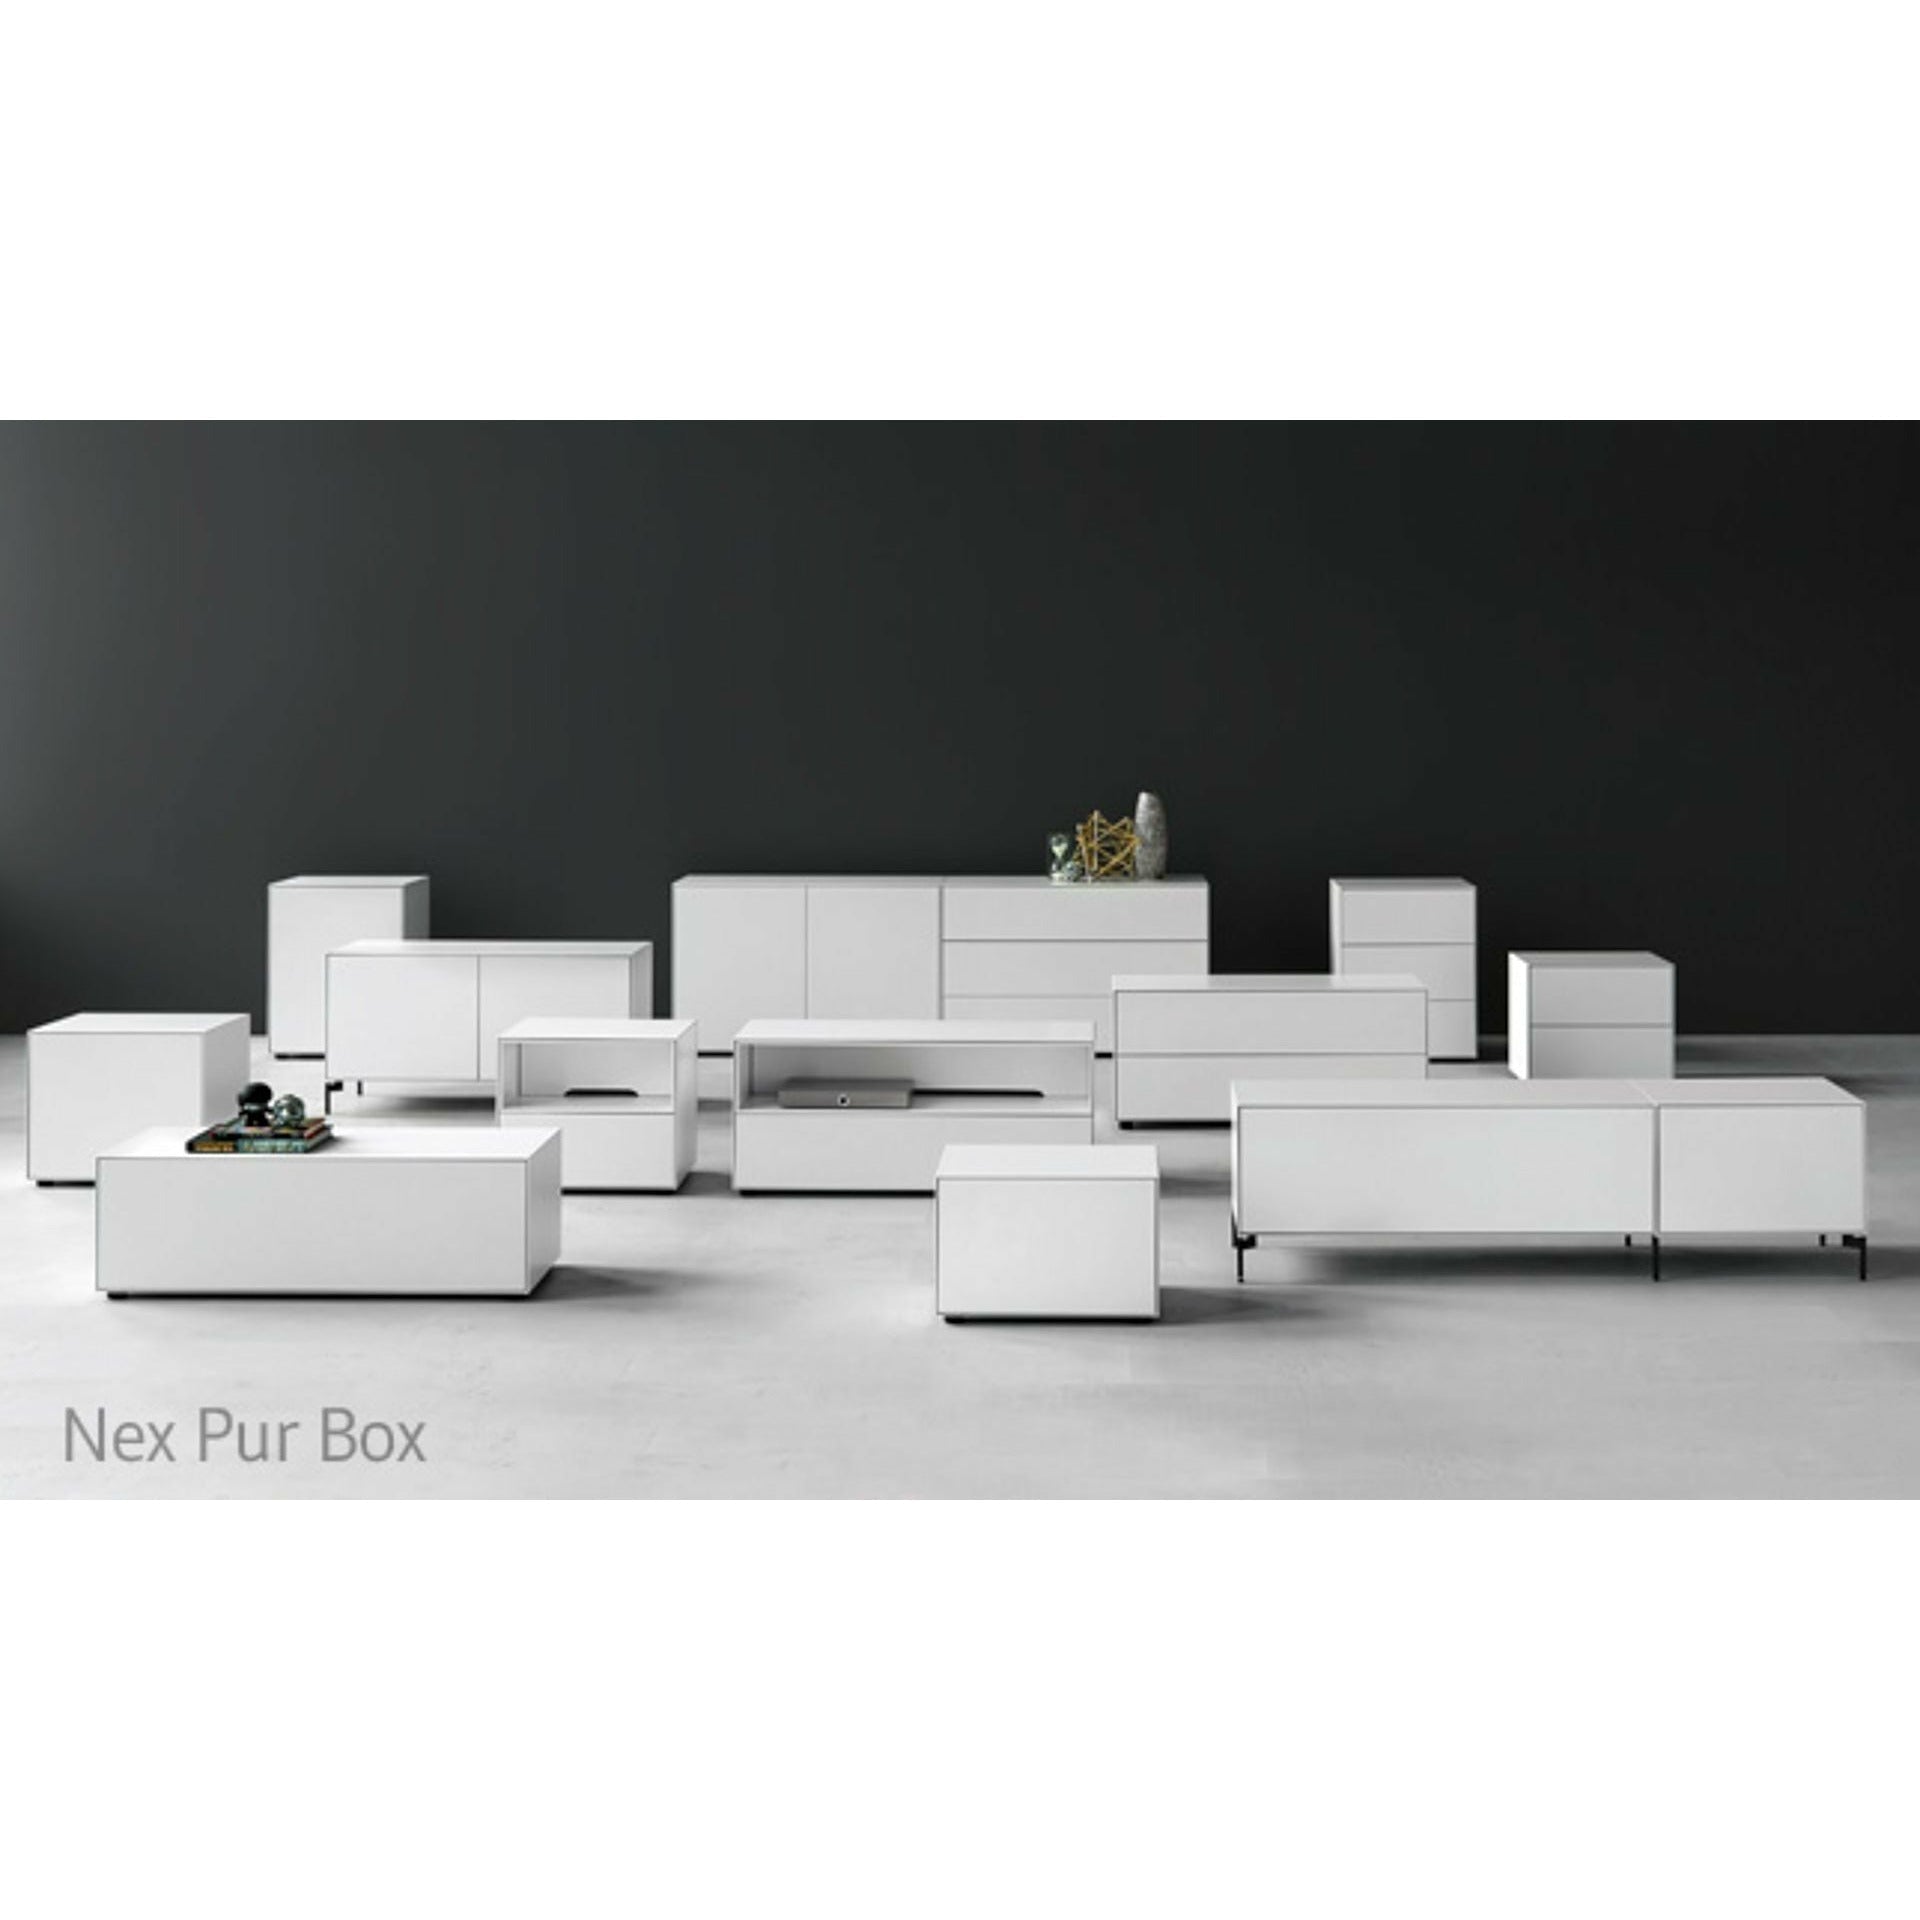 Piiure Nex Pur Box dveře hx w 75x120 cm, 1 police, bílá